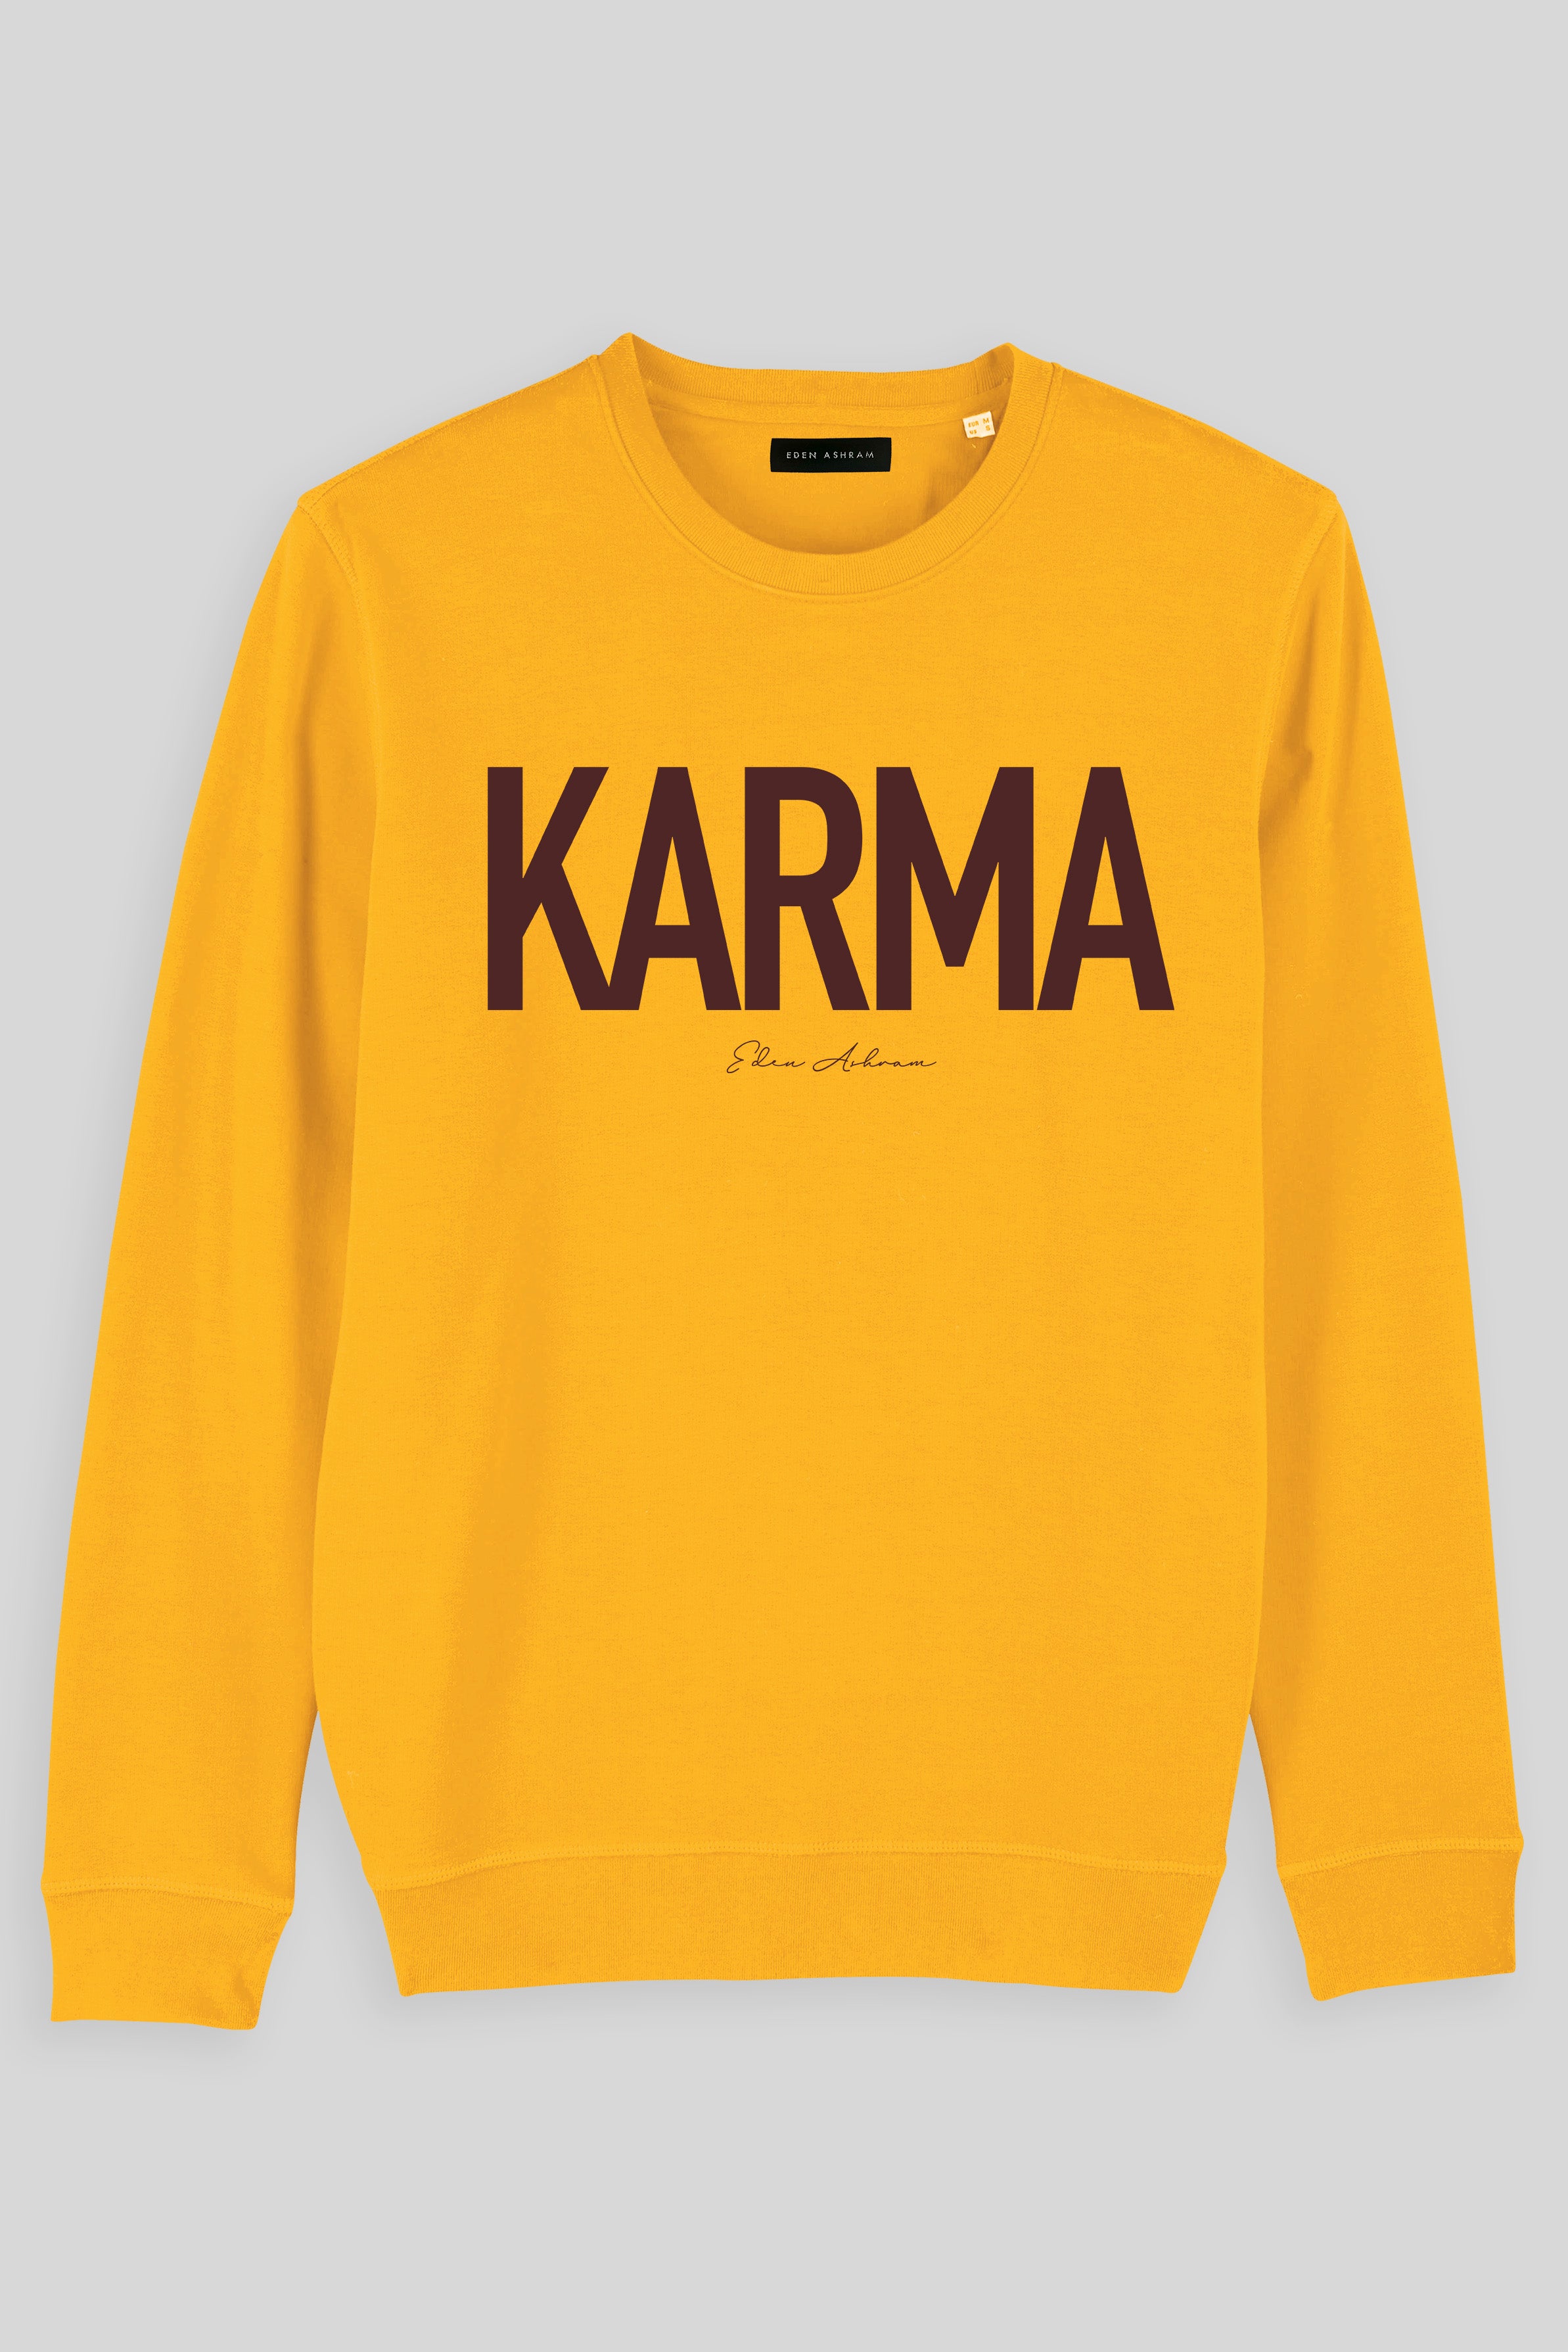 Eden Ashram Karma Premium Crew Neck Sweatshirt Spectra Yellow